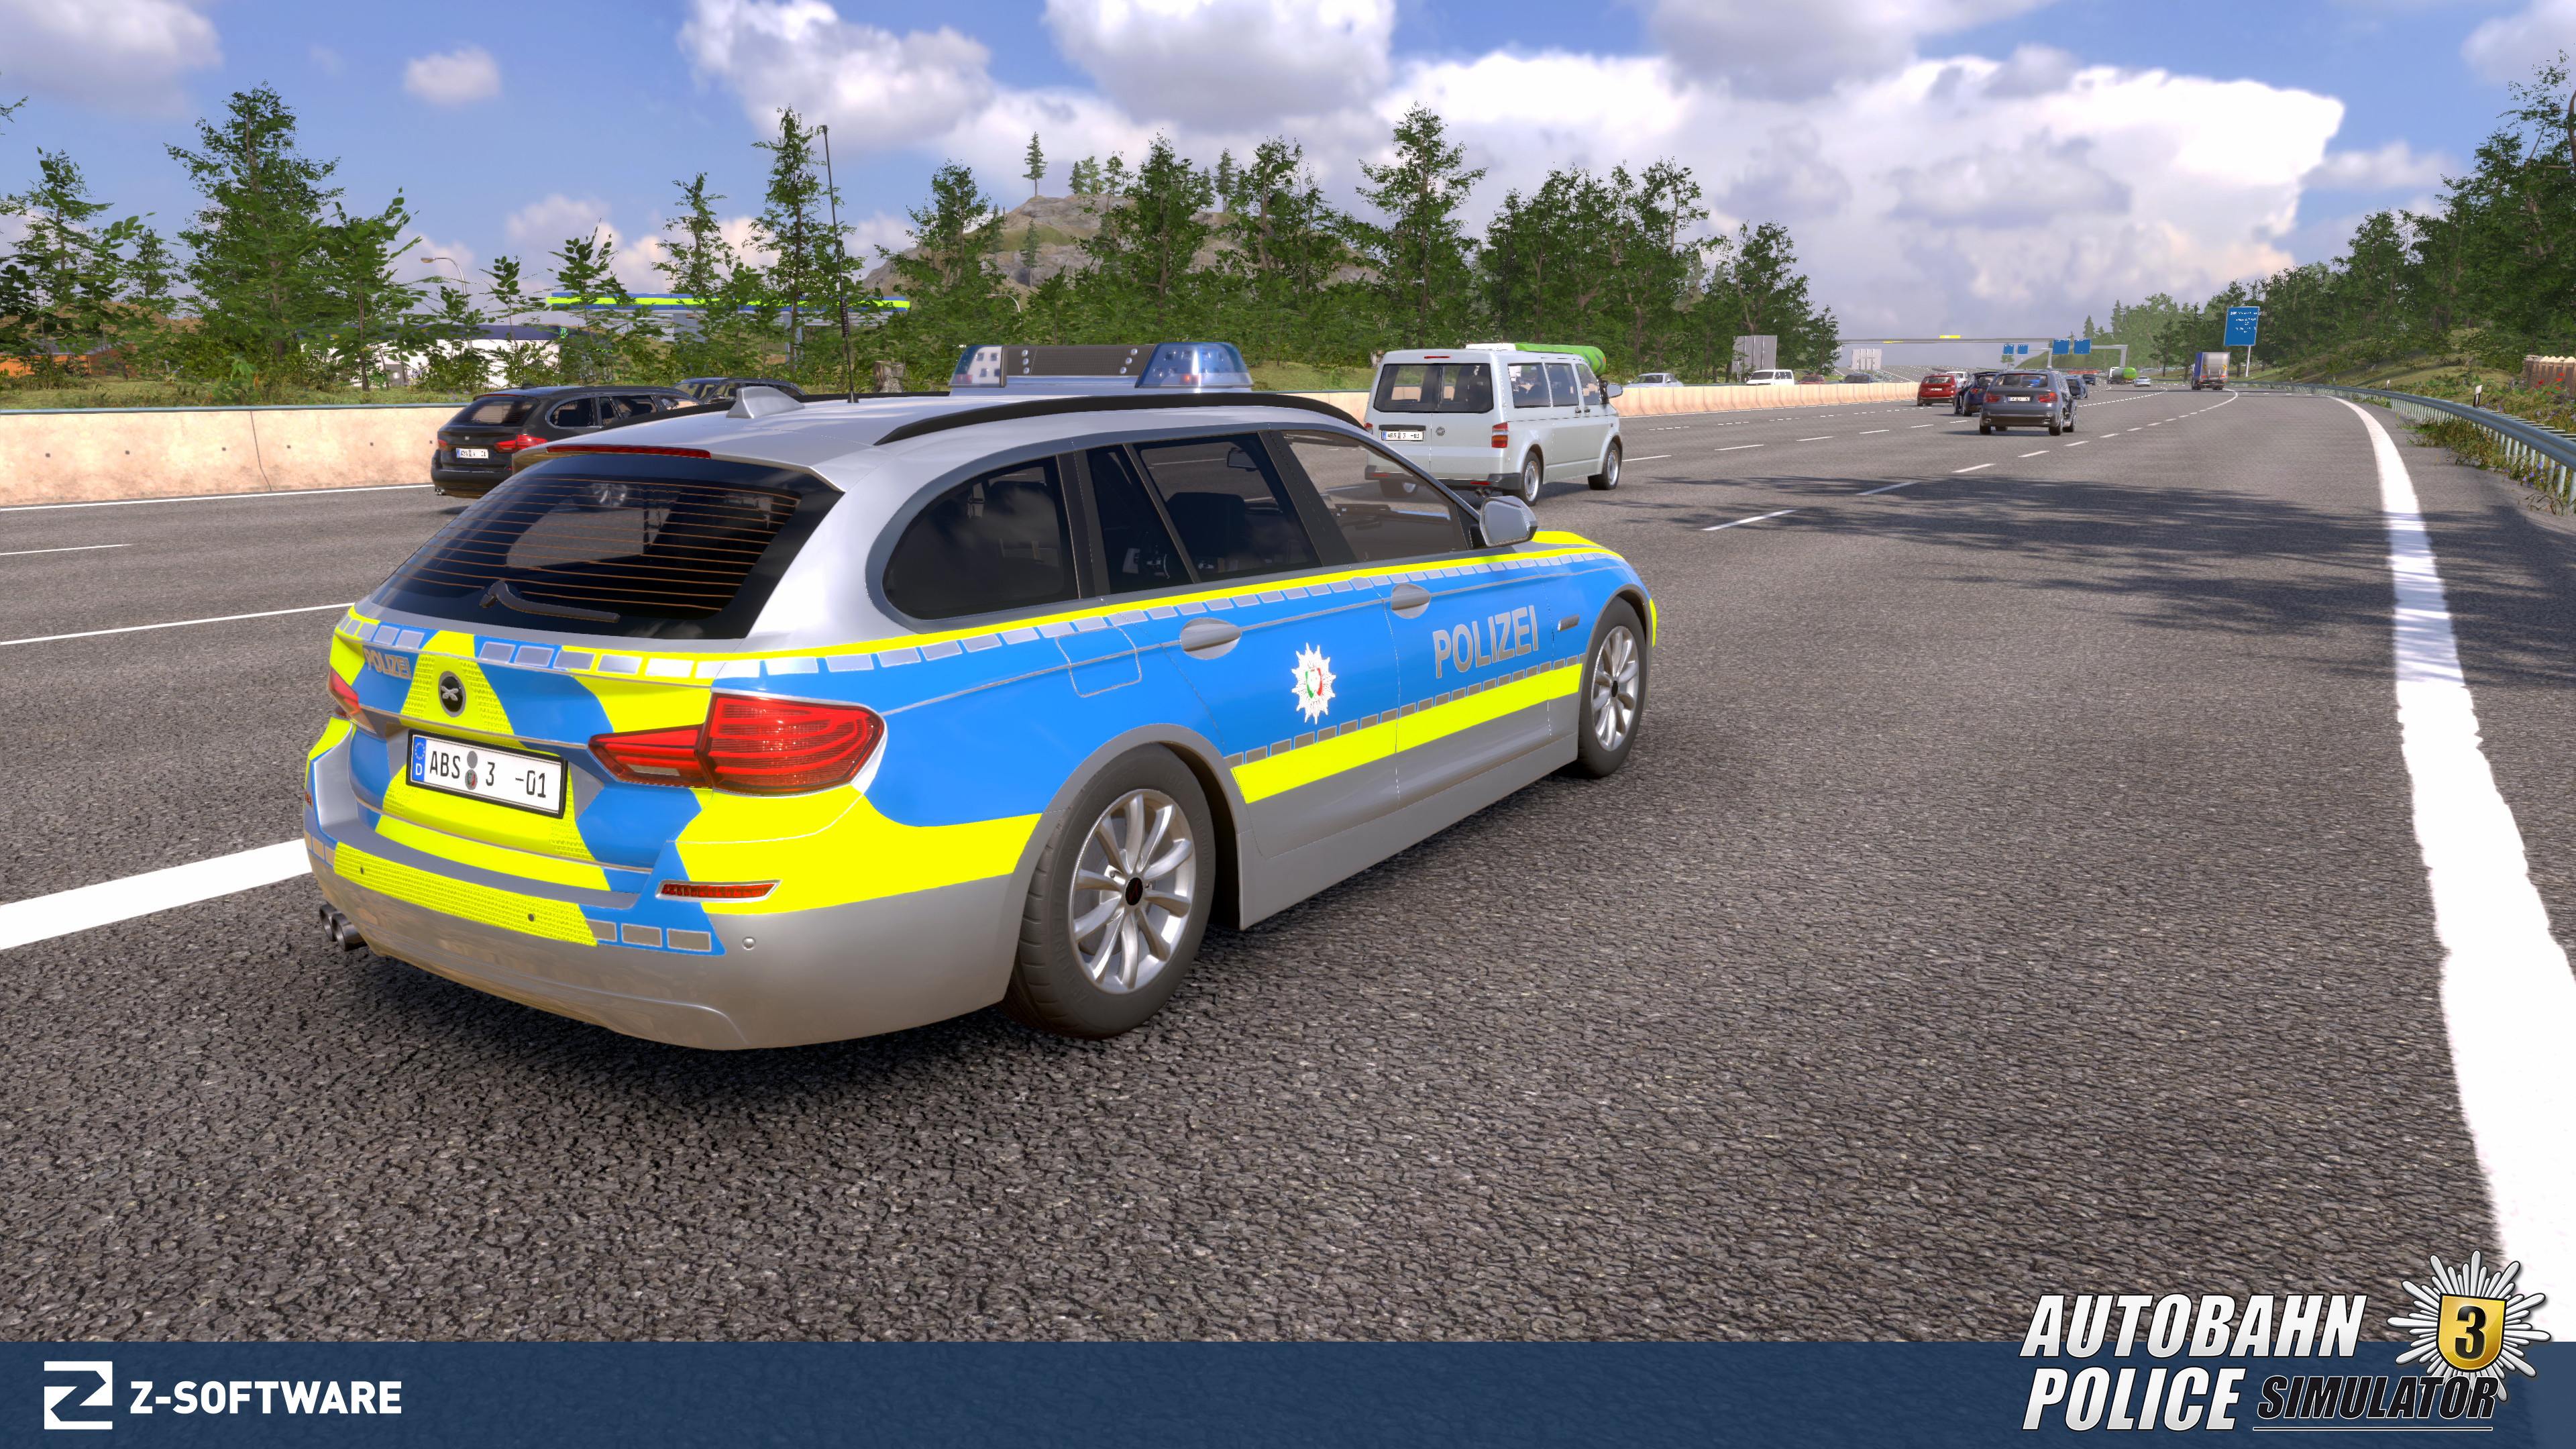 Autobahn Police Simulator 3 screenshot